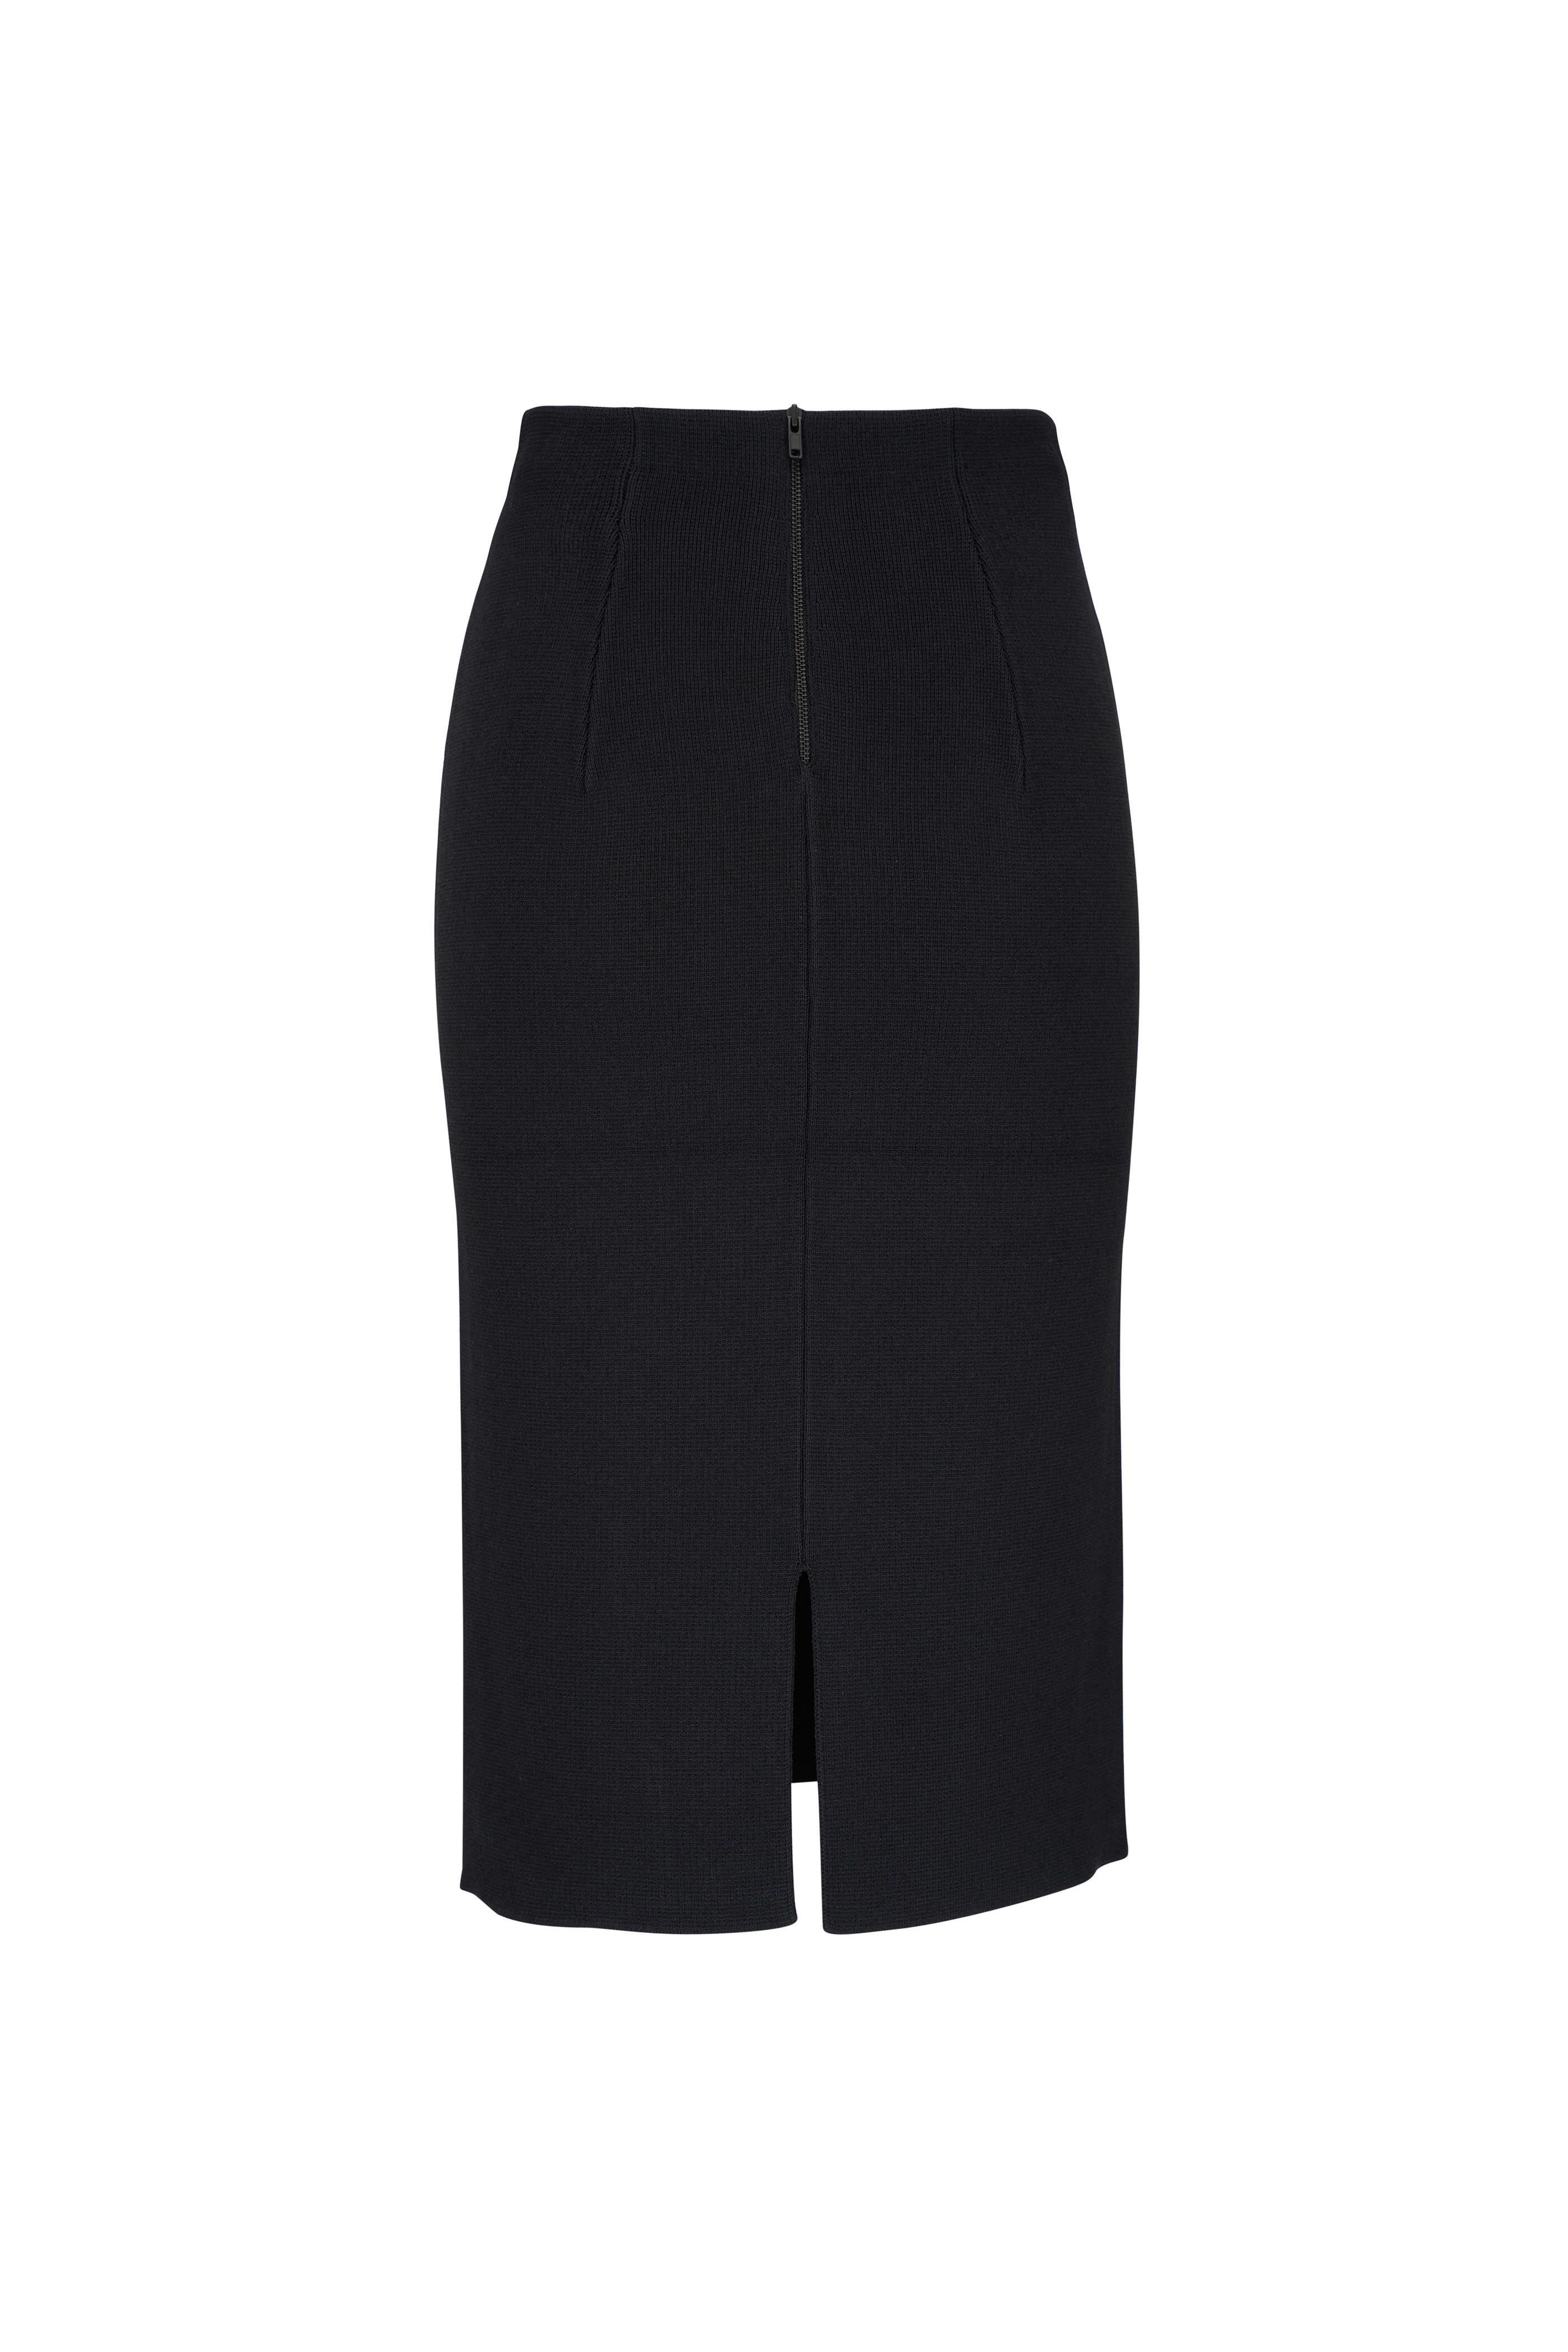 Scanlan Theodore - Black Crepe Knit Pencil Skirt